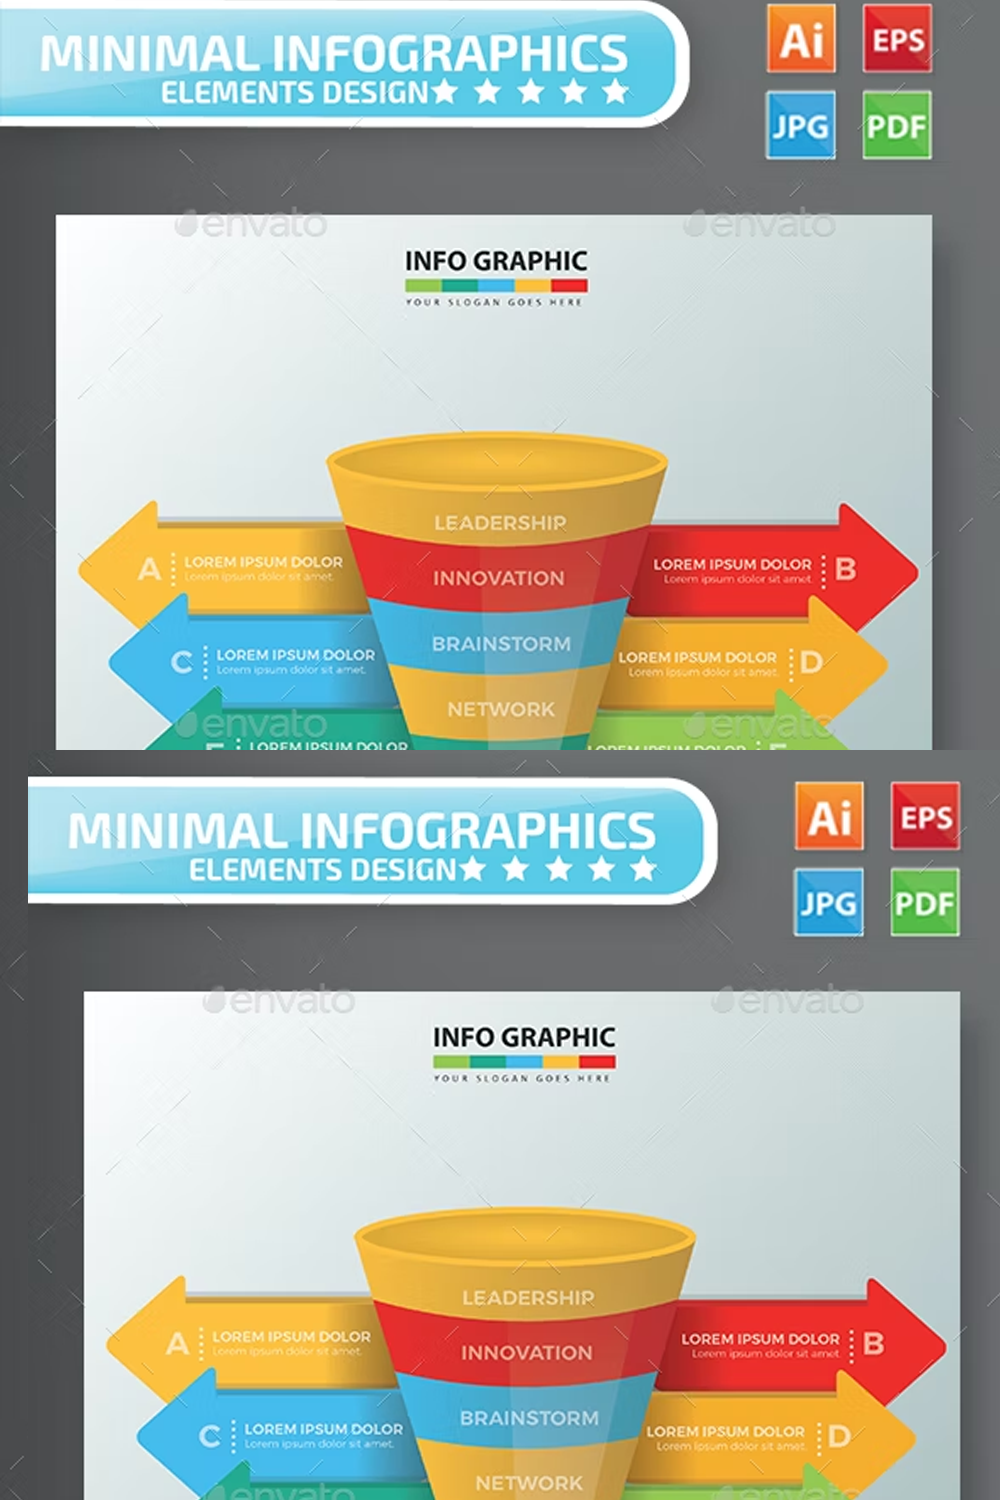 Illustrations funnel infographic design of pinterest.